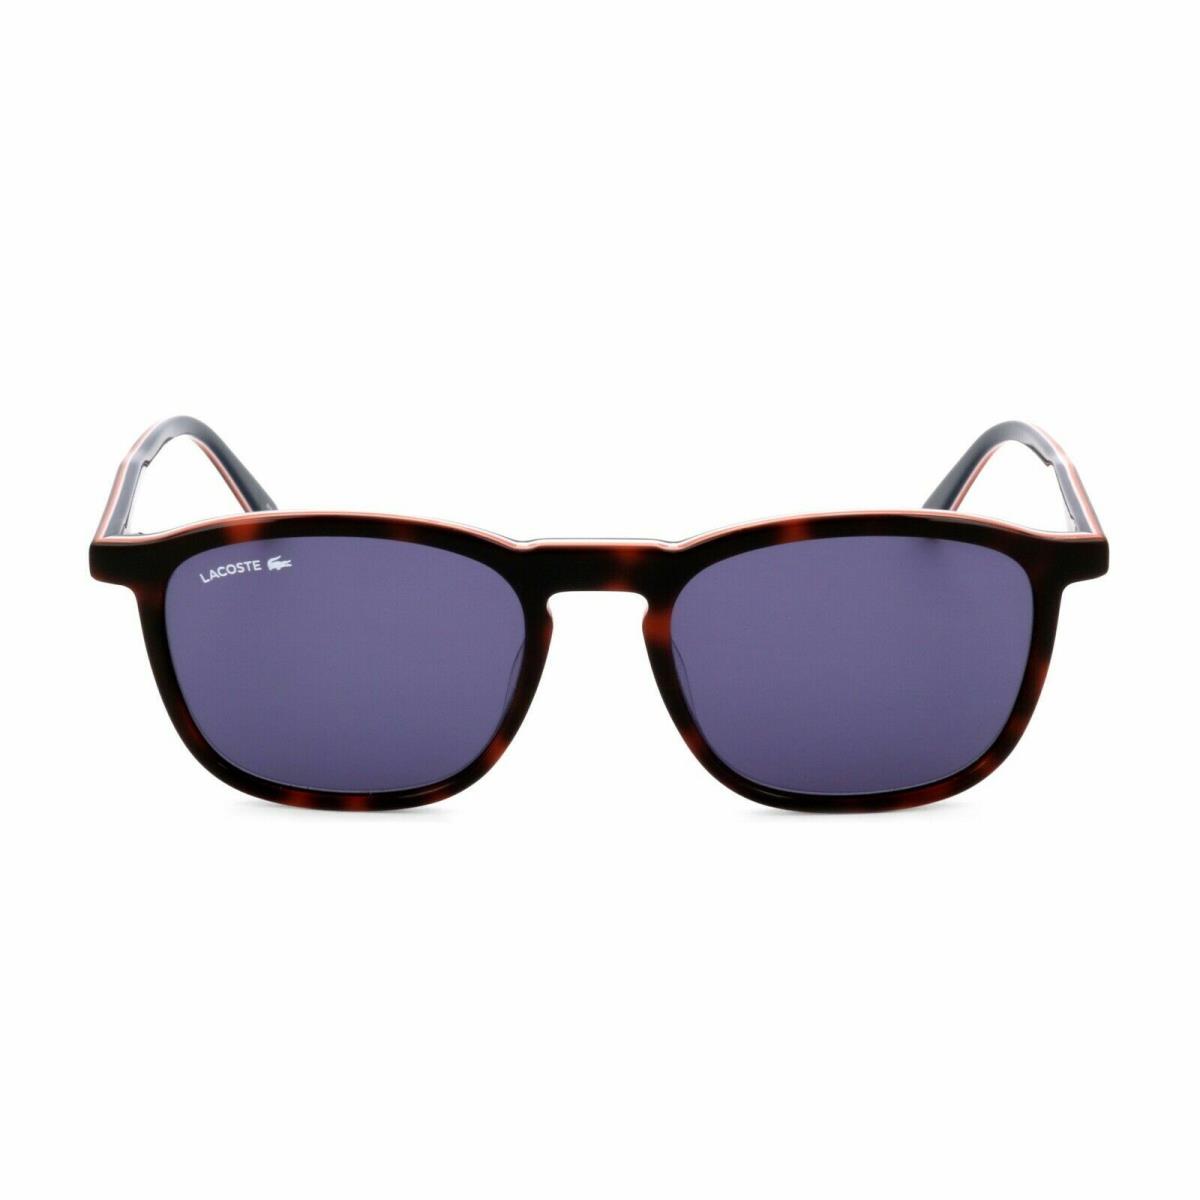 Lacoste Sunglasses L901s 214 52mm Havana Orange Grey Lens Square Unisex Sunglass